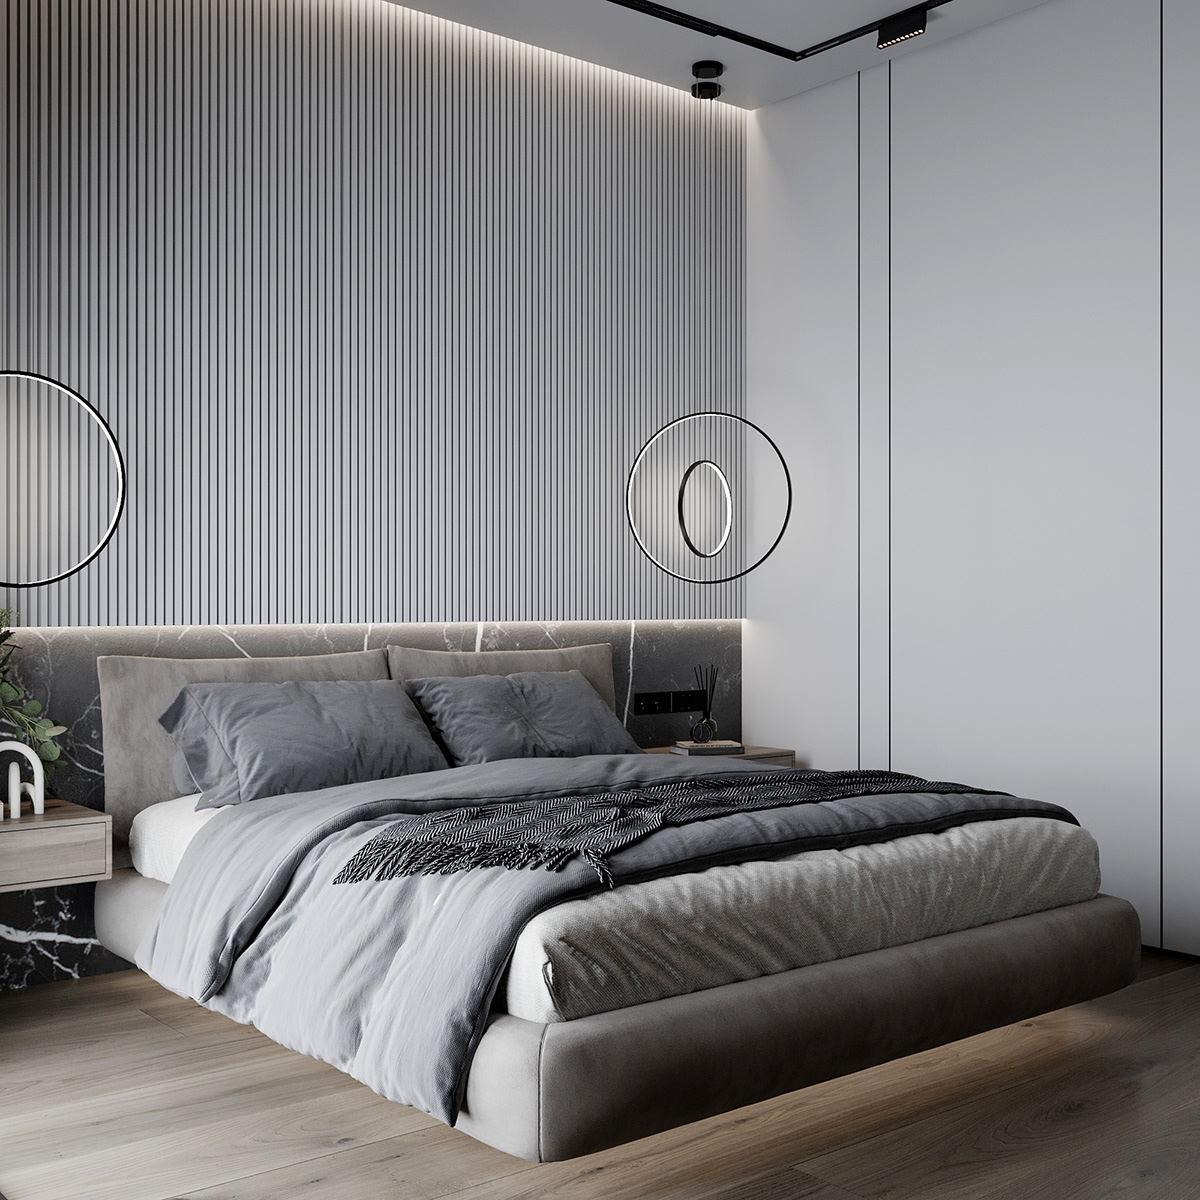 bedroom interior design  living room Render visualization визуализация дизайн интерьера Дизайн проект  интерьер